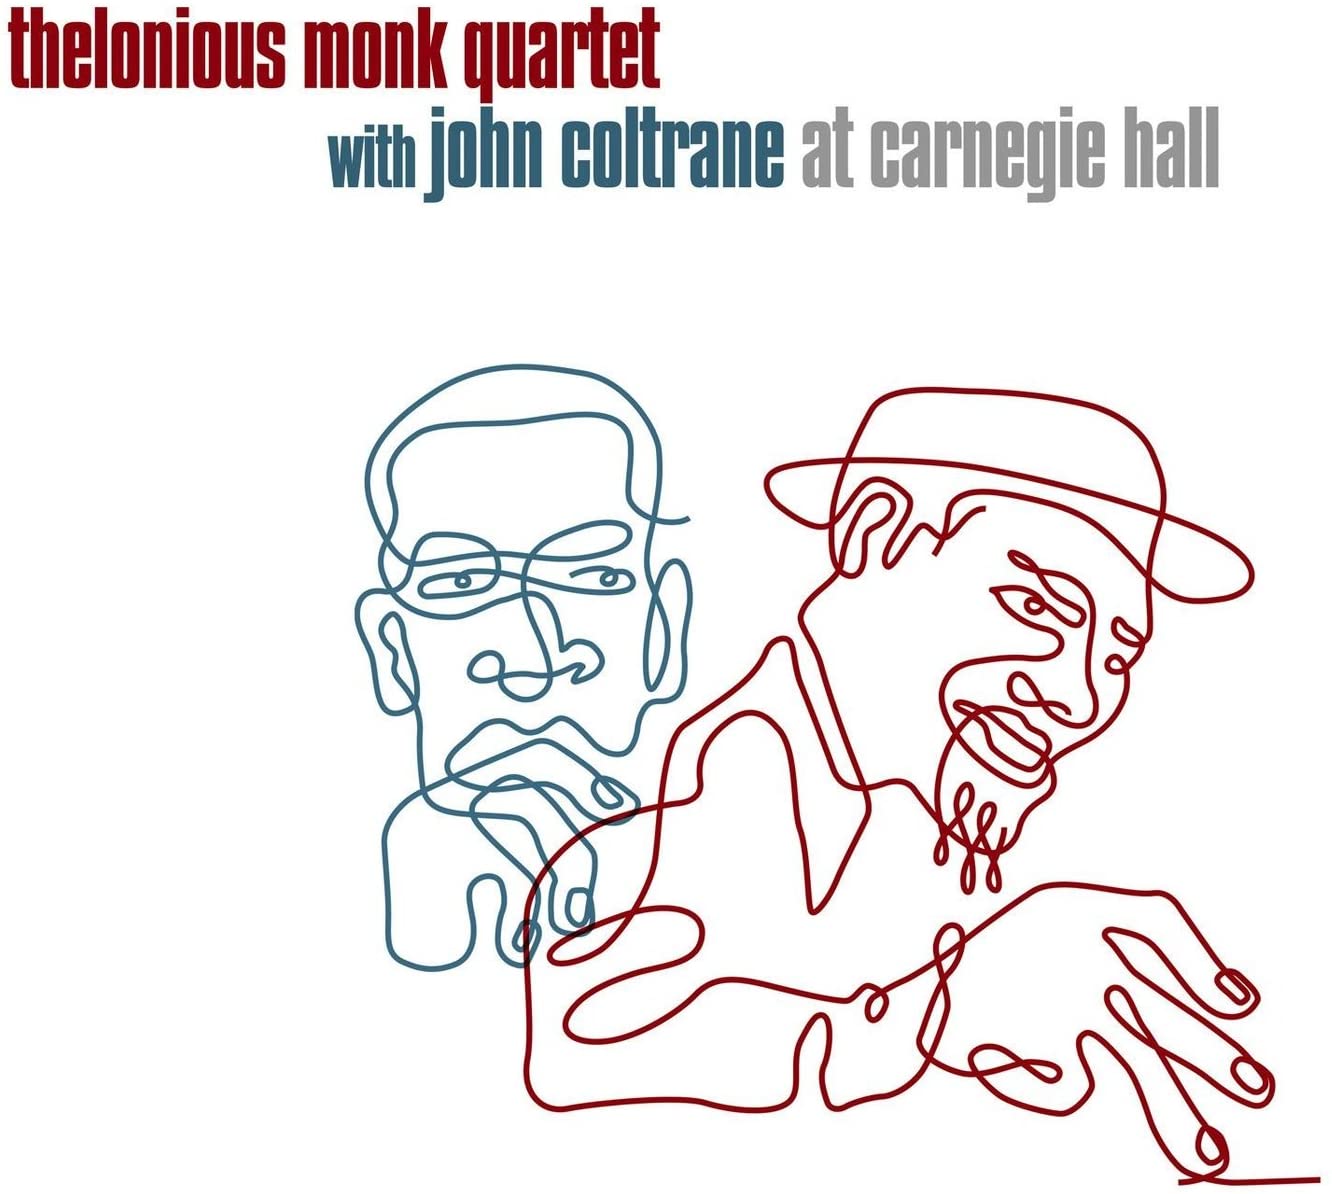 Квартет Телониуса Монка с Джоном Колтрейном – Thelonious Monk Quartet with John Coltrane at Carnegie Hall (2005)